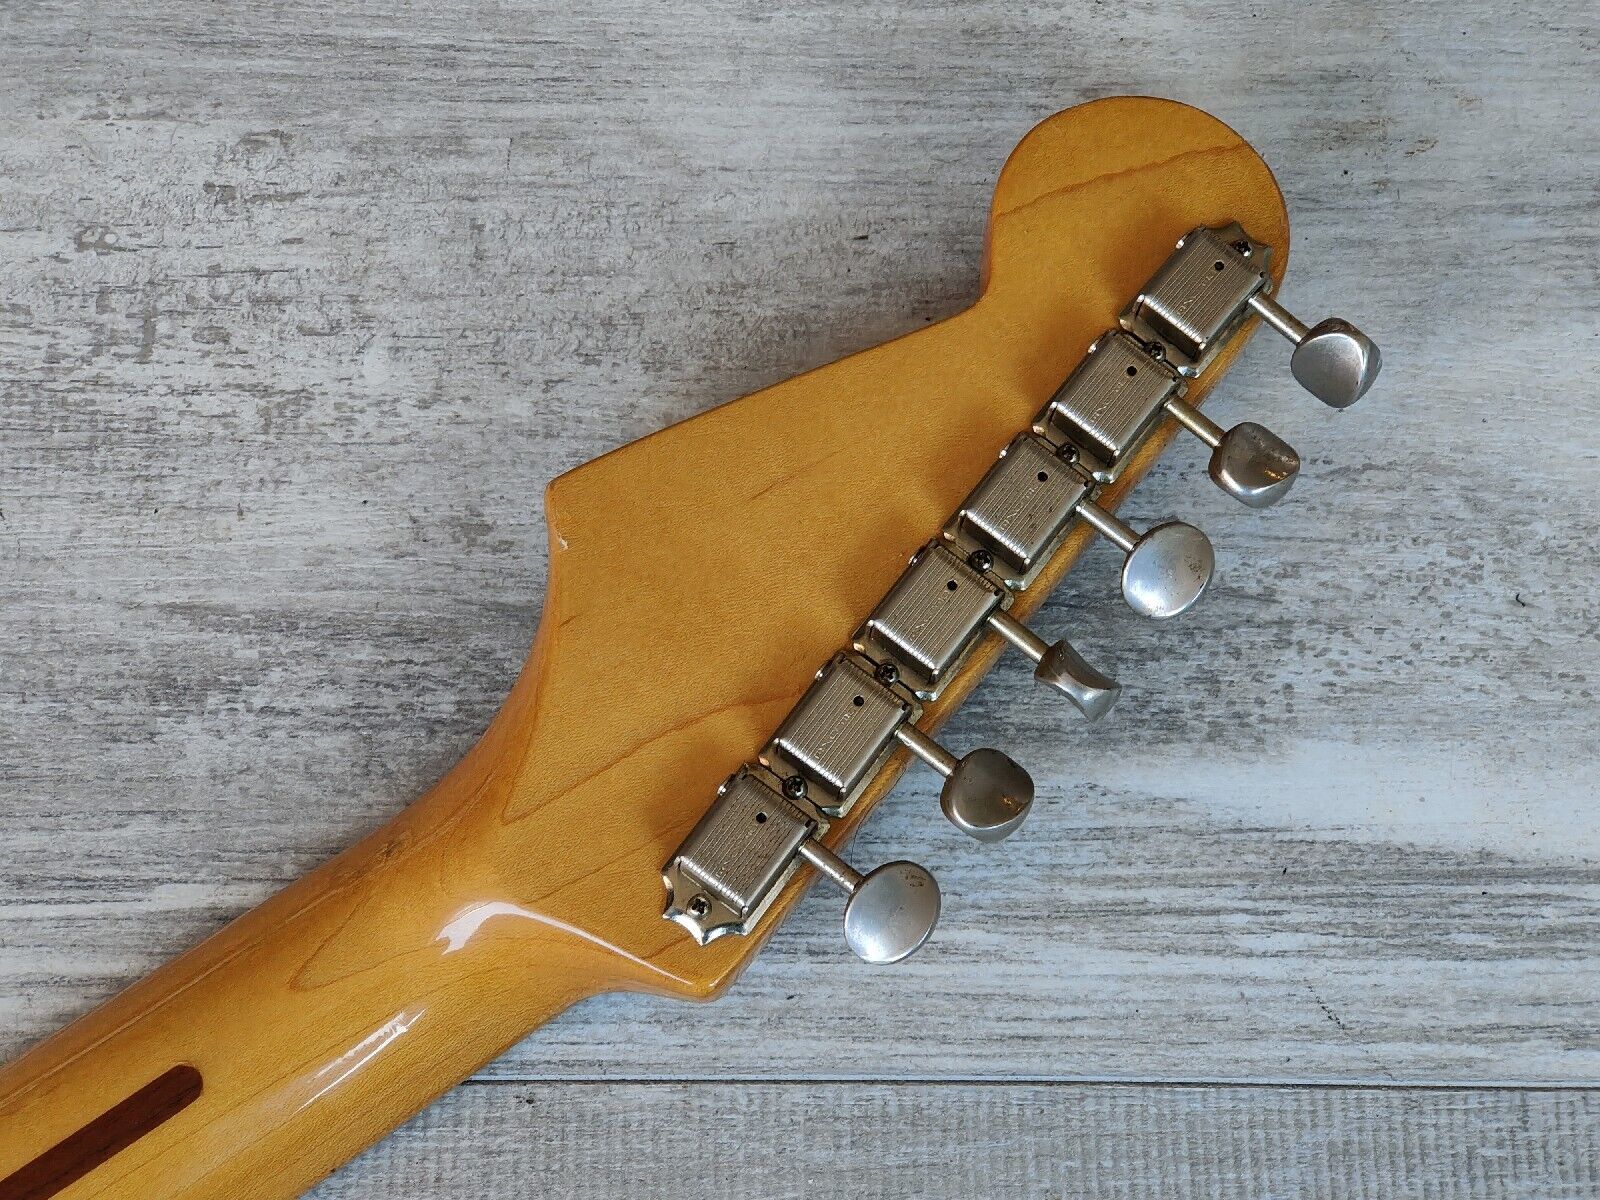 1980's Profile Silhouette Japanese '57 Style Stratocaster (Sunburst)